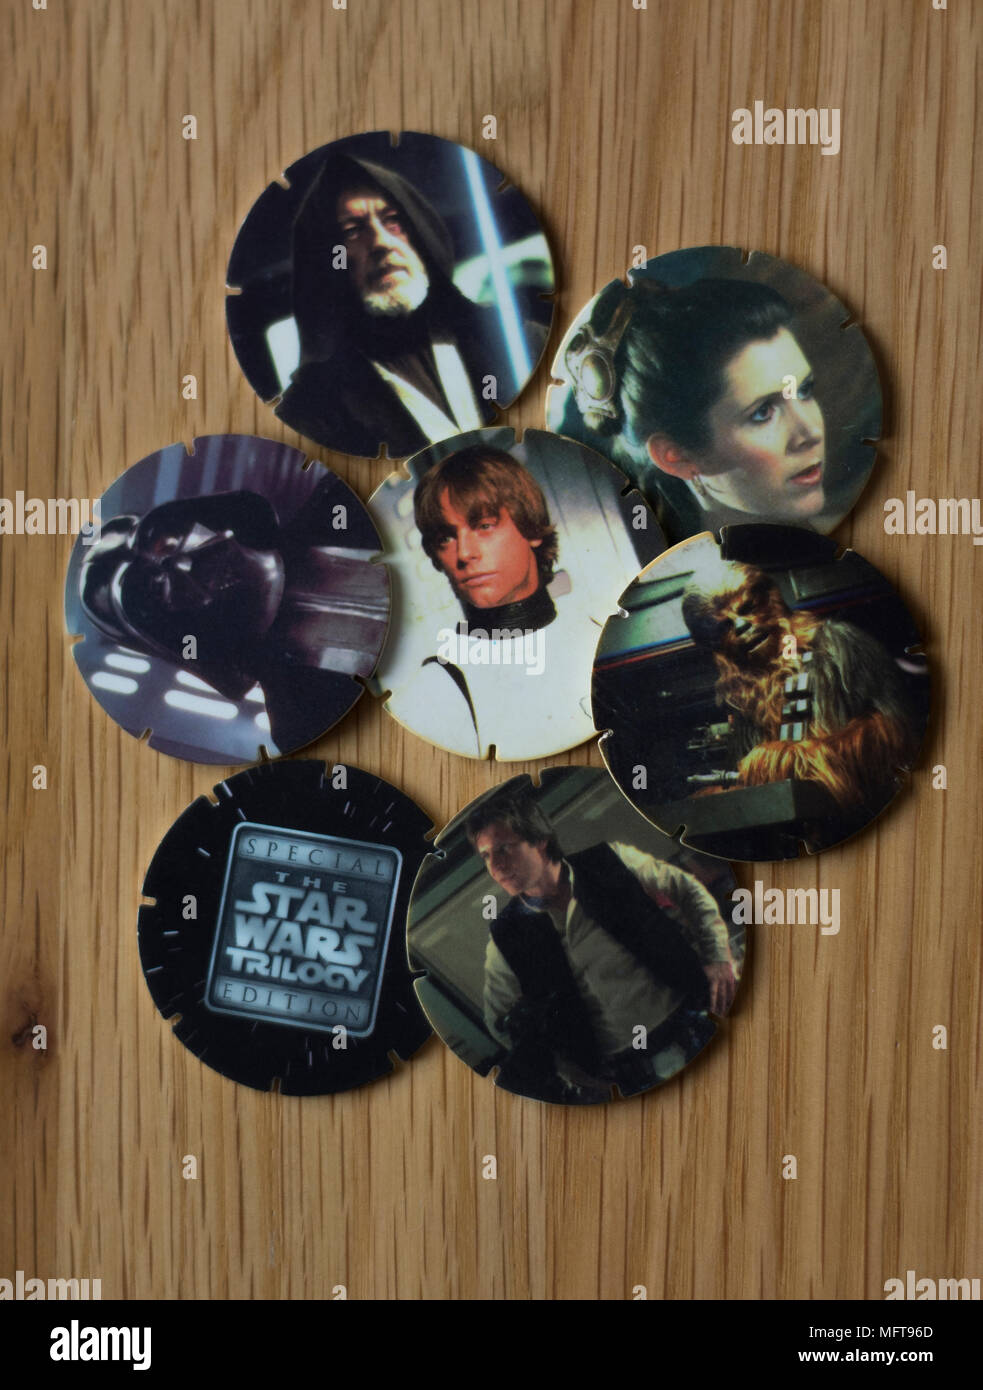 Star Wars Tazos. pogs. Für Walkers Crisps Charaktere aus Star Wars. Special Edition Star Wars Trilogie Tazos Stockfoto